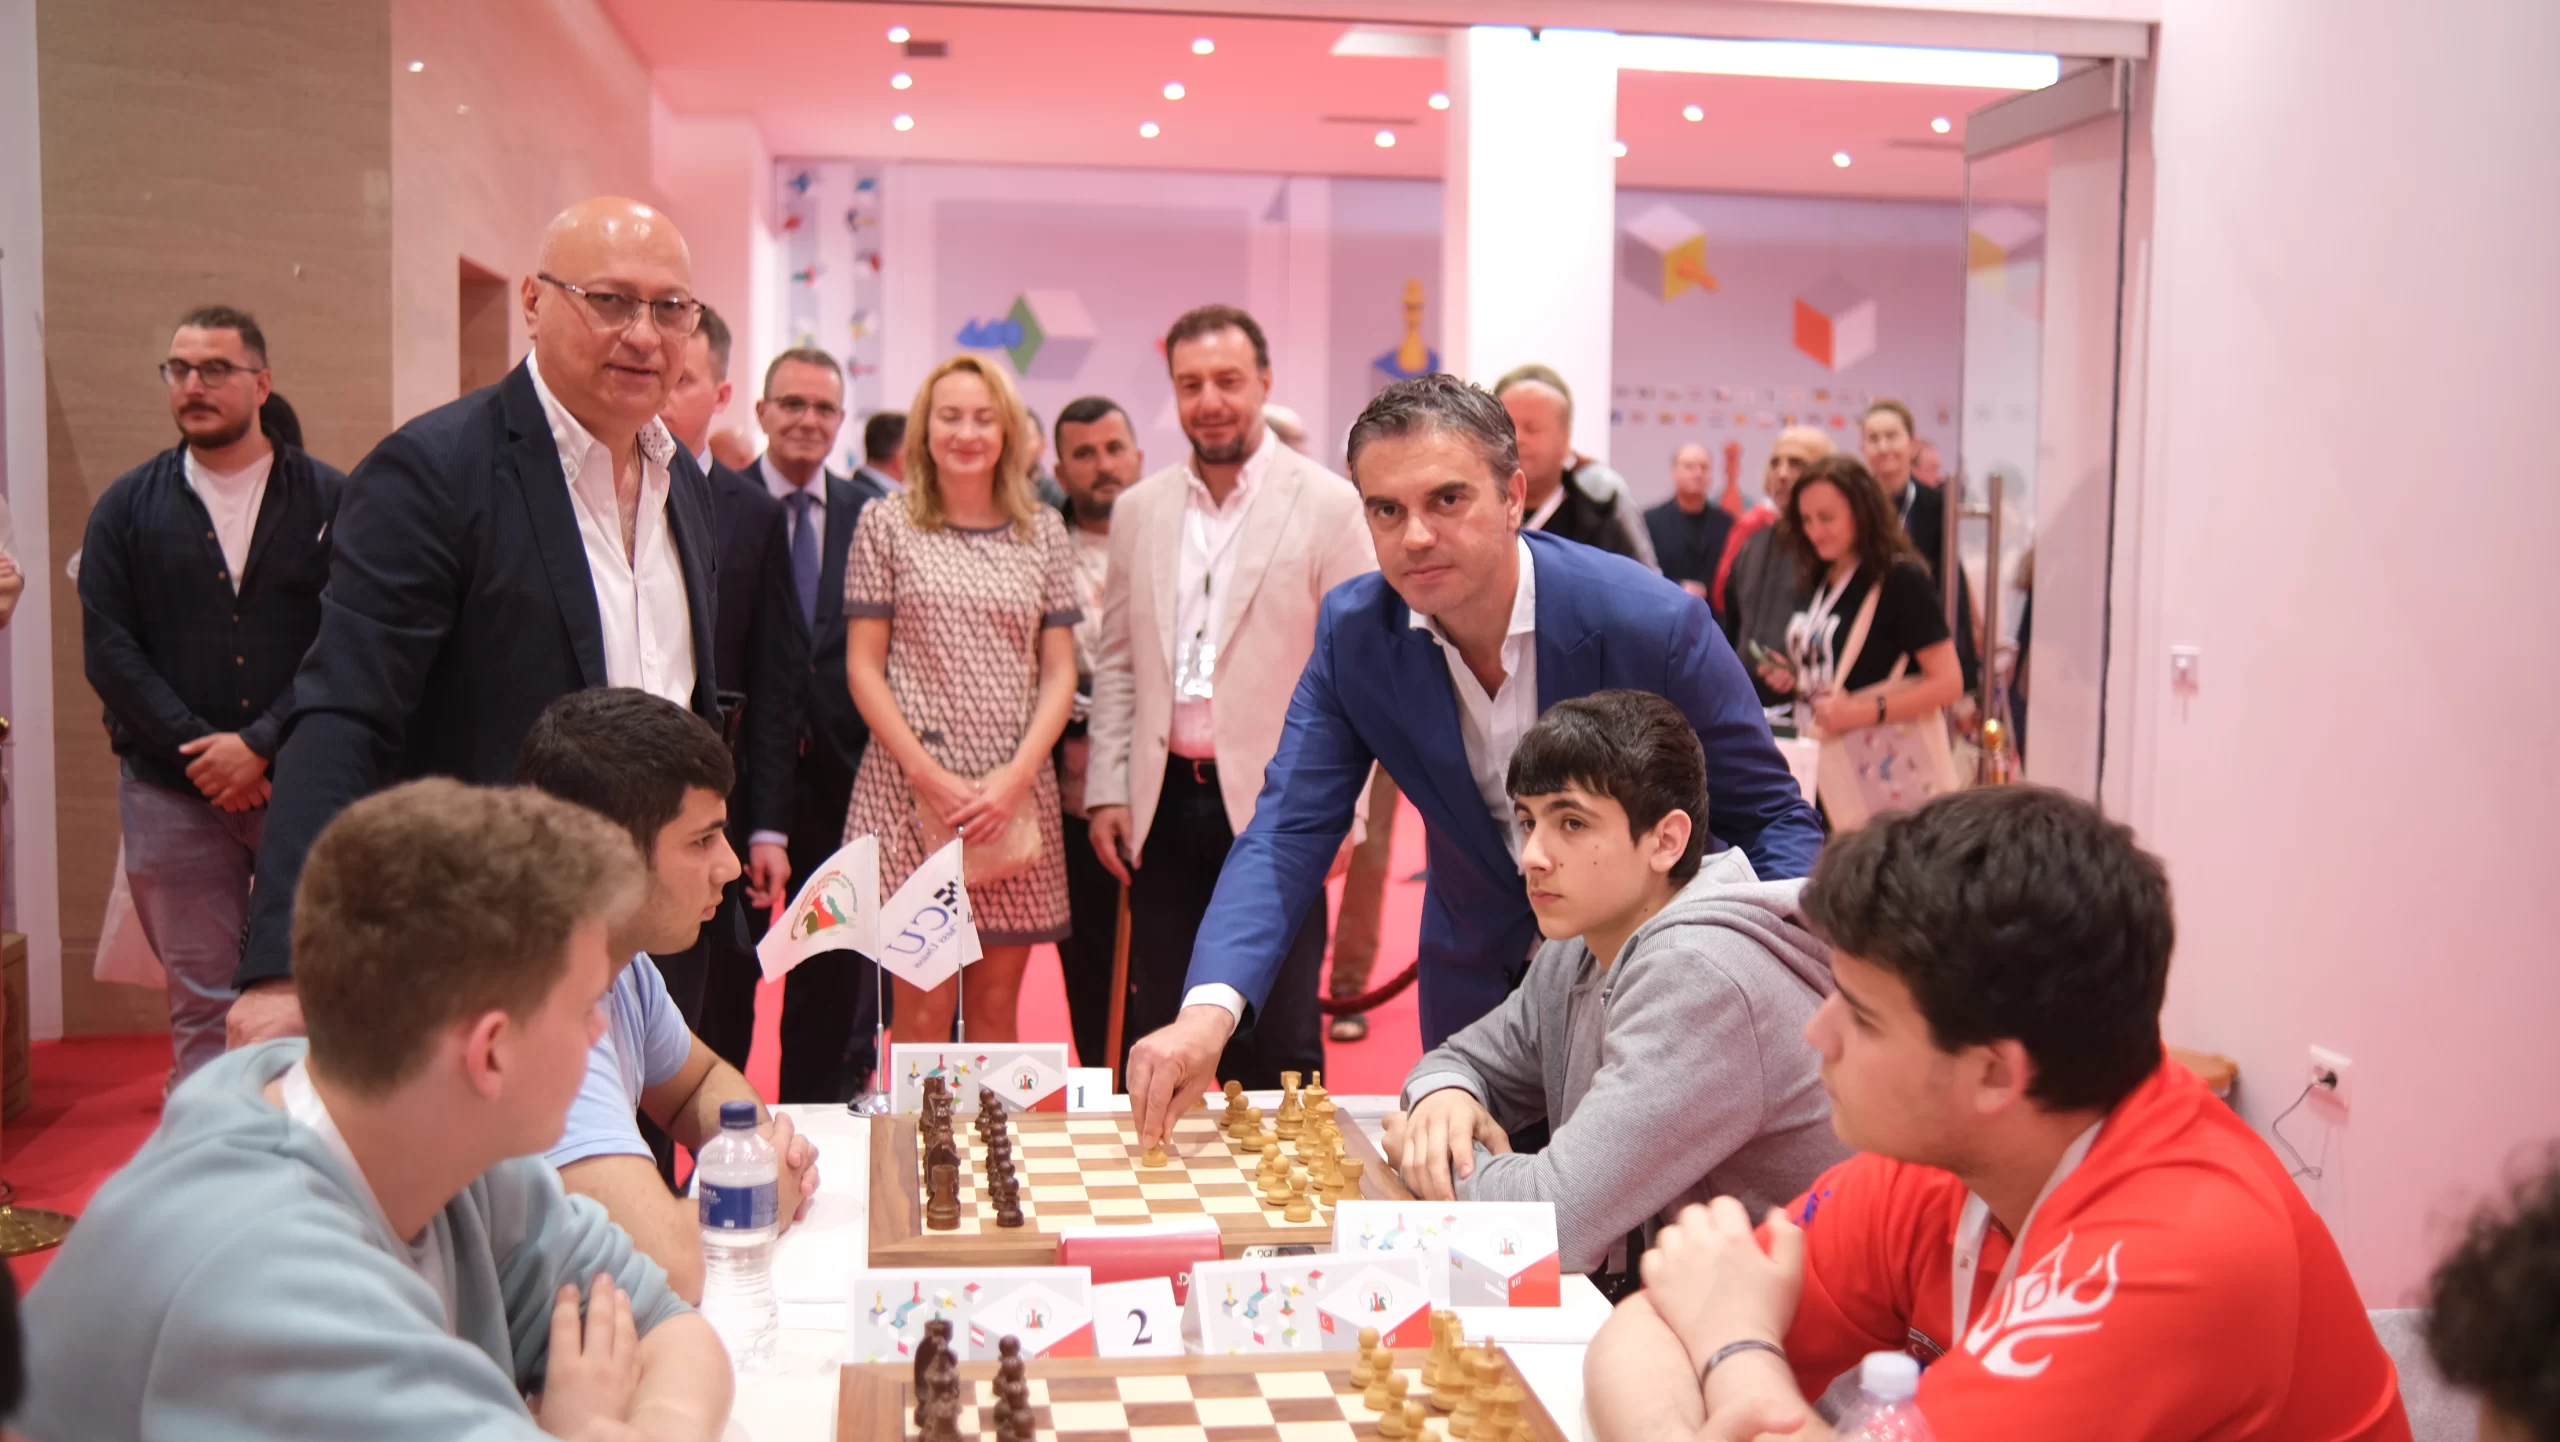 European Pairs Blitz Chess Championship 2023 starts in Krakow – European  Chess Union